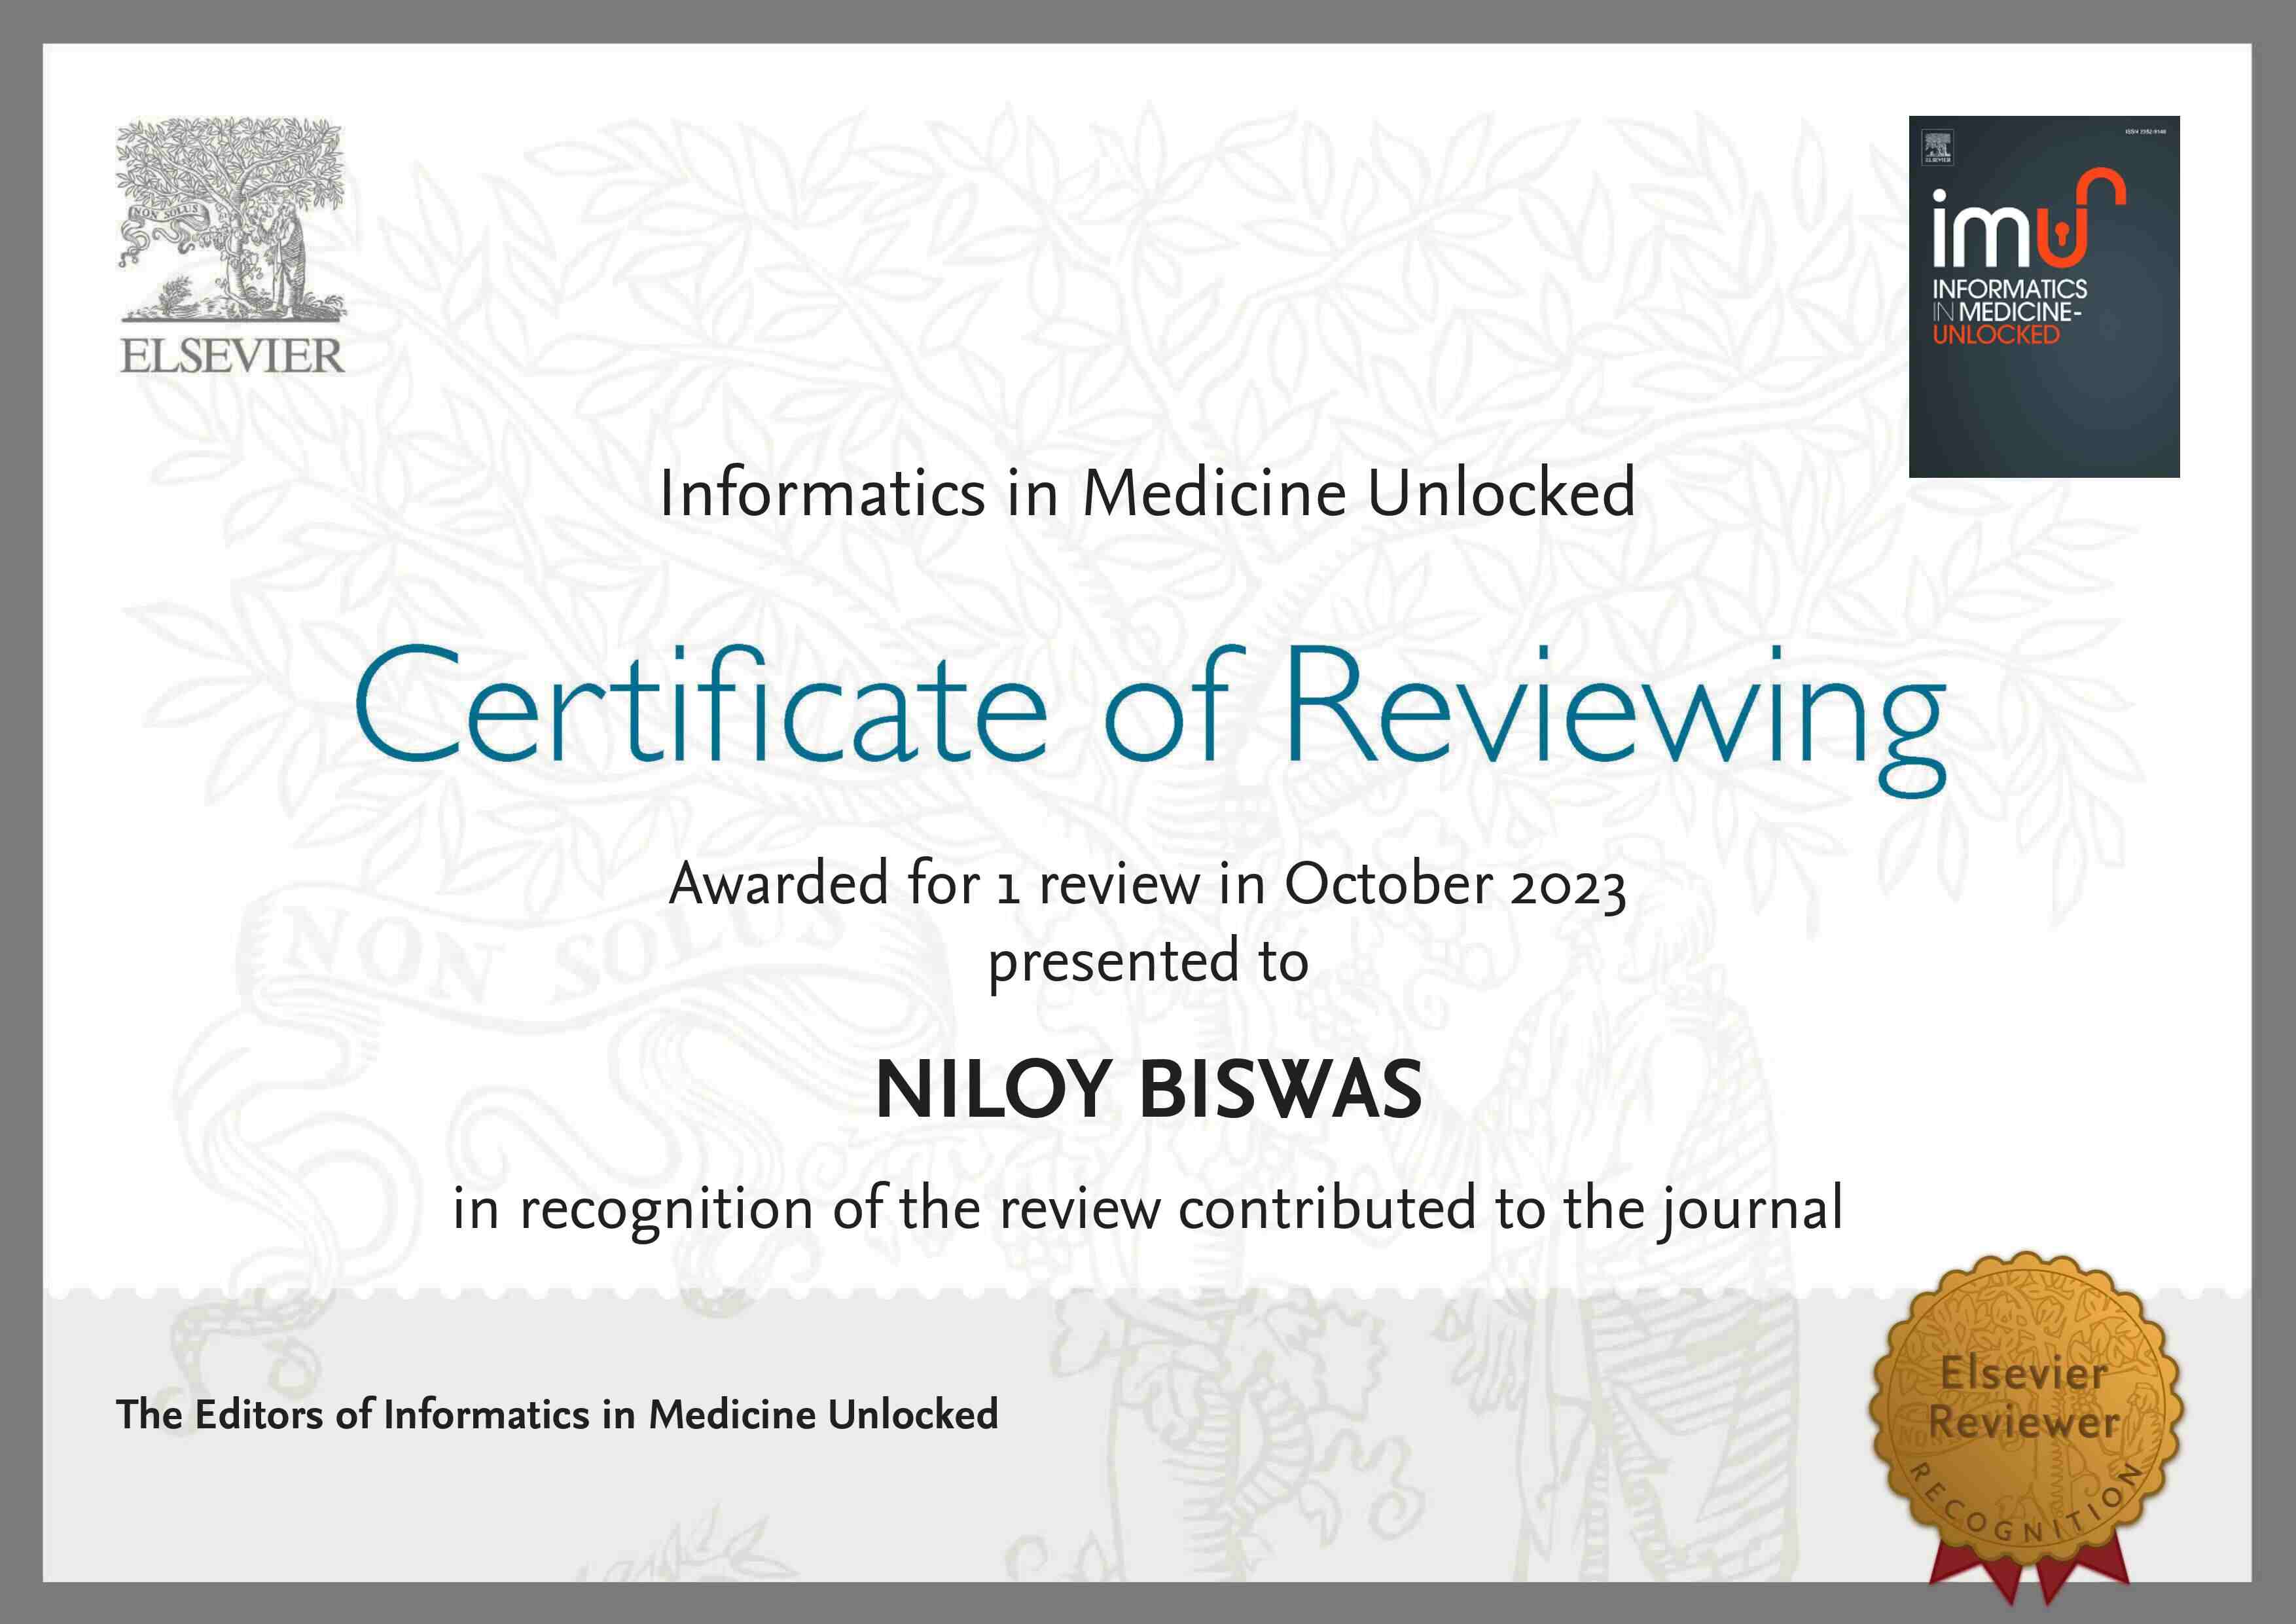 Niloy Biswas - Elsevier Informatics in Medicine Unlocked Reviewer Certificate